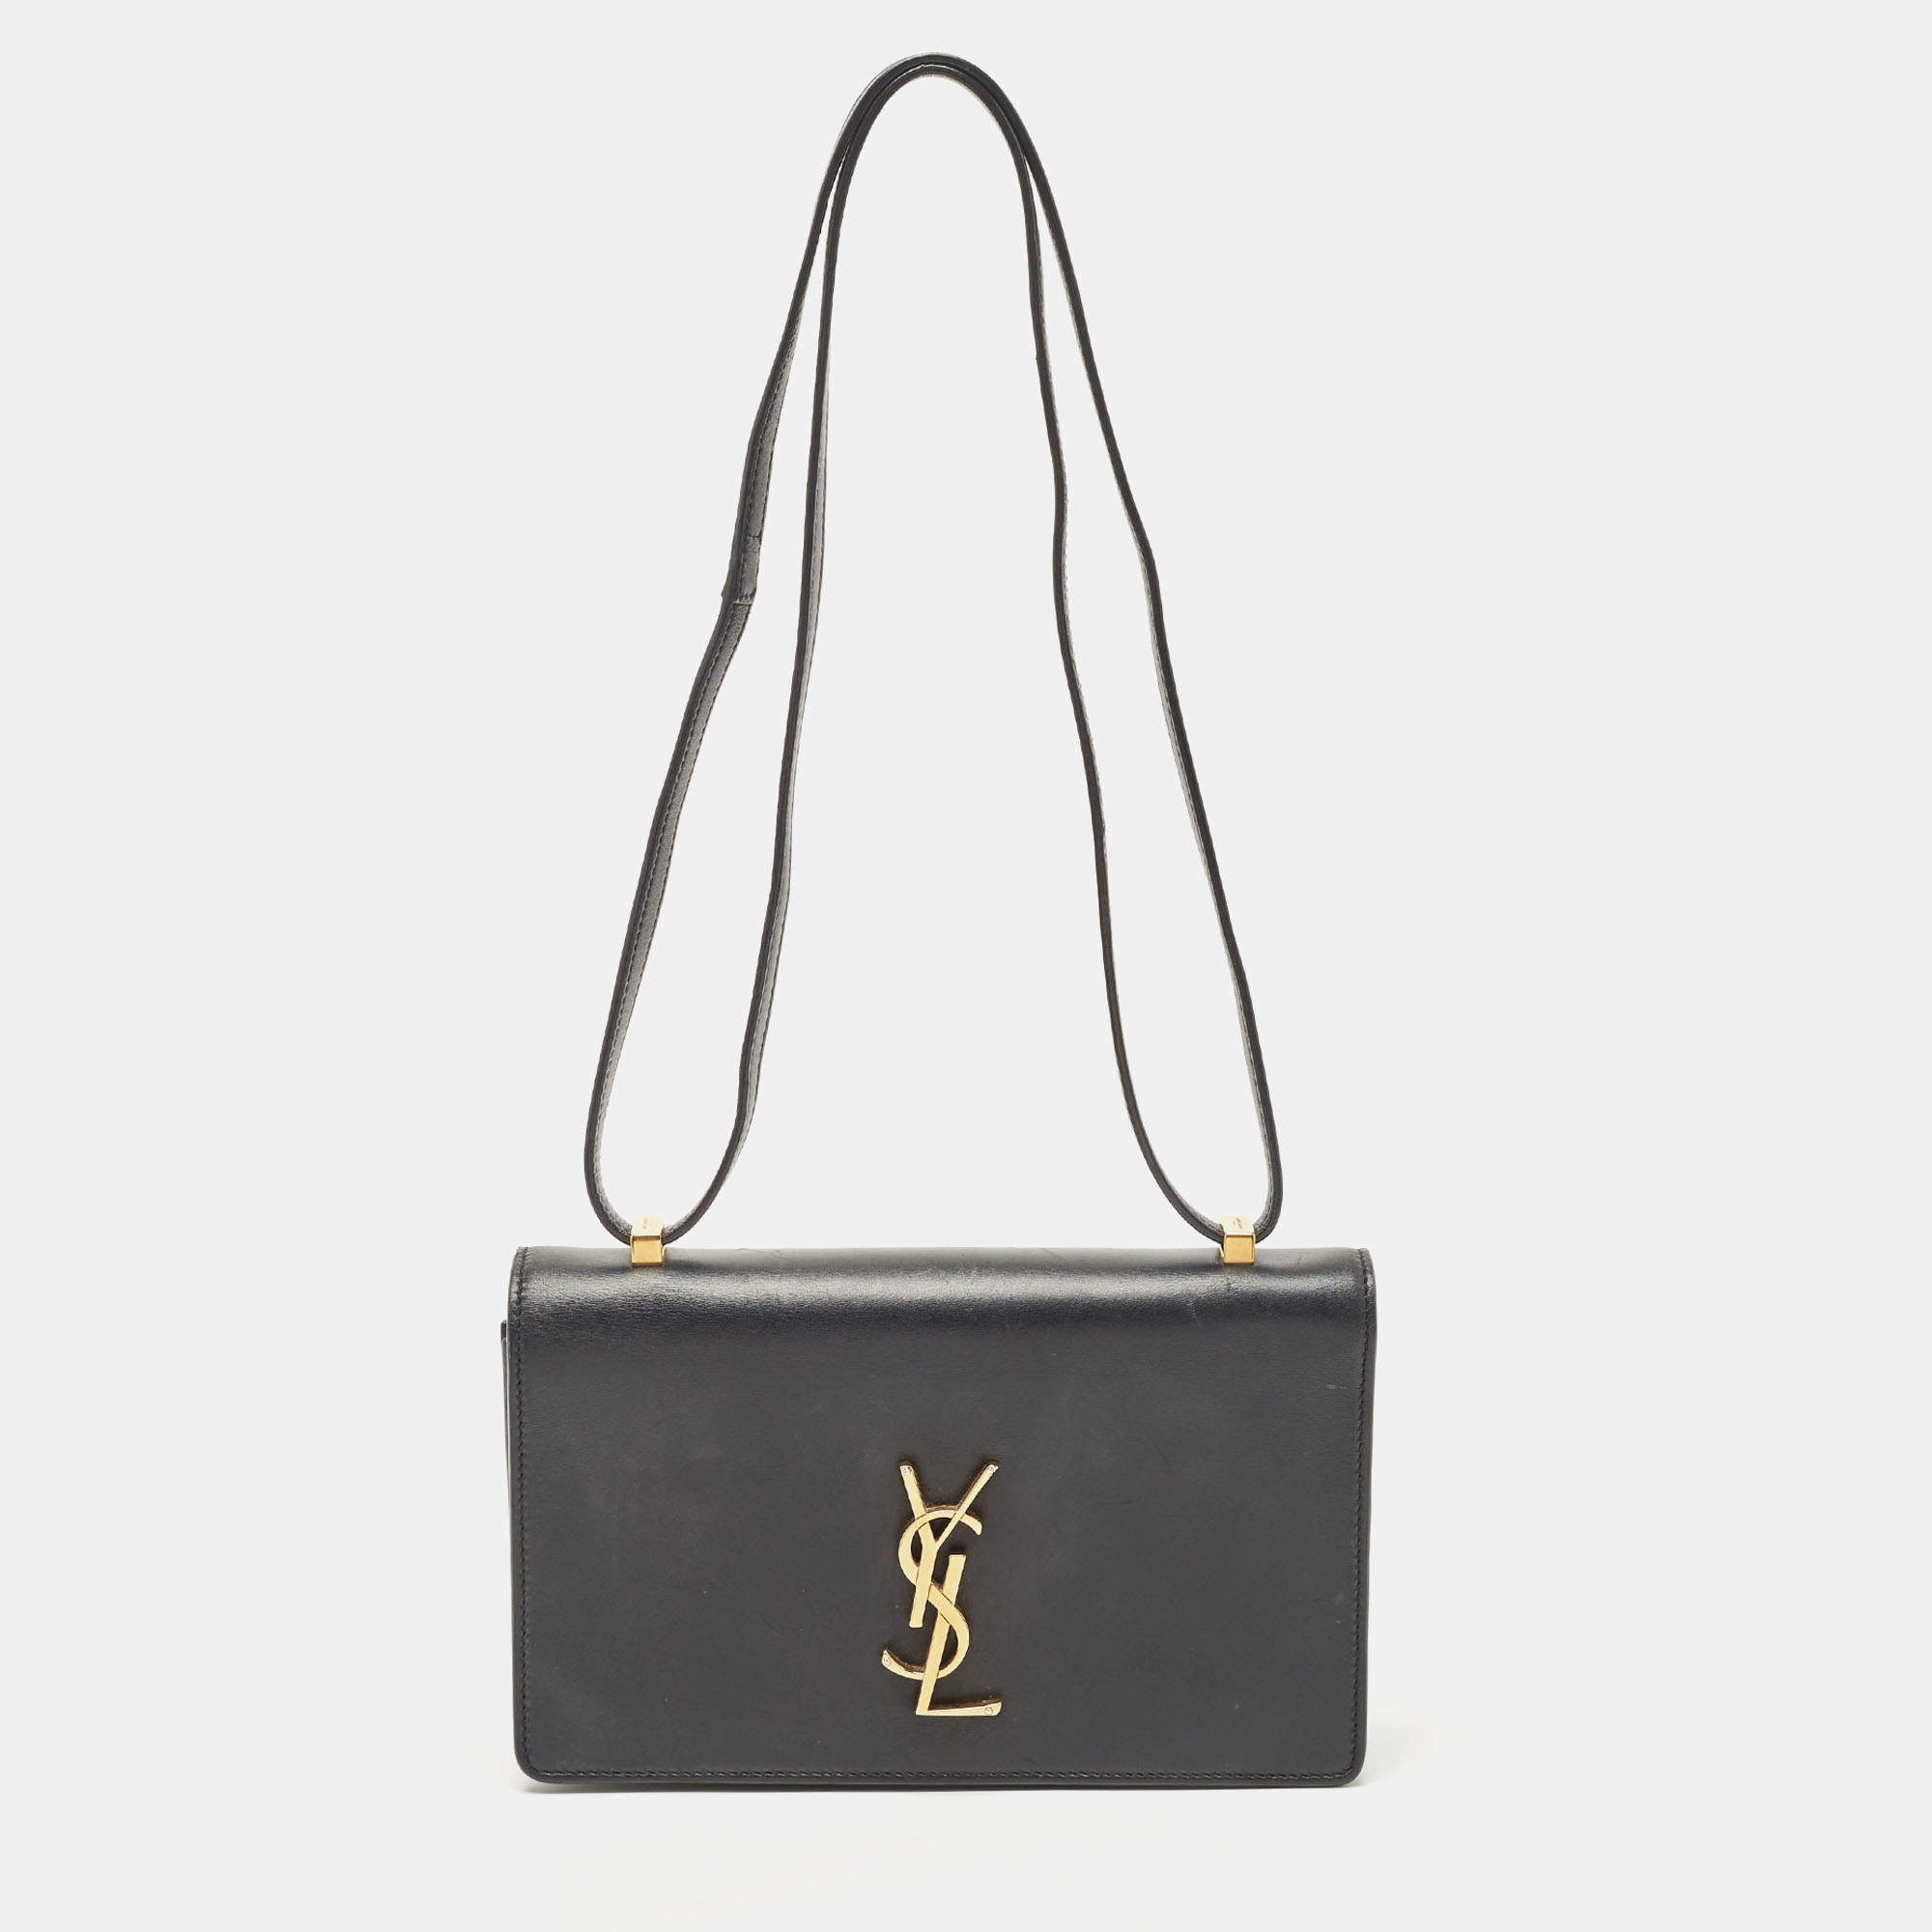 Saint Laurent Small YSL Monogram Leather Satchel Bag